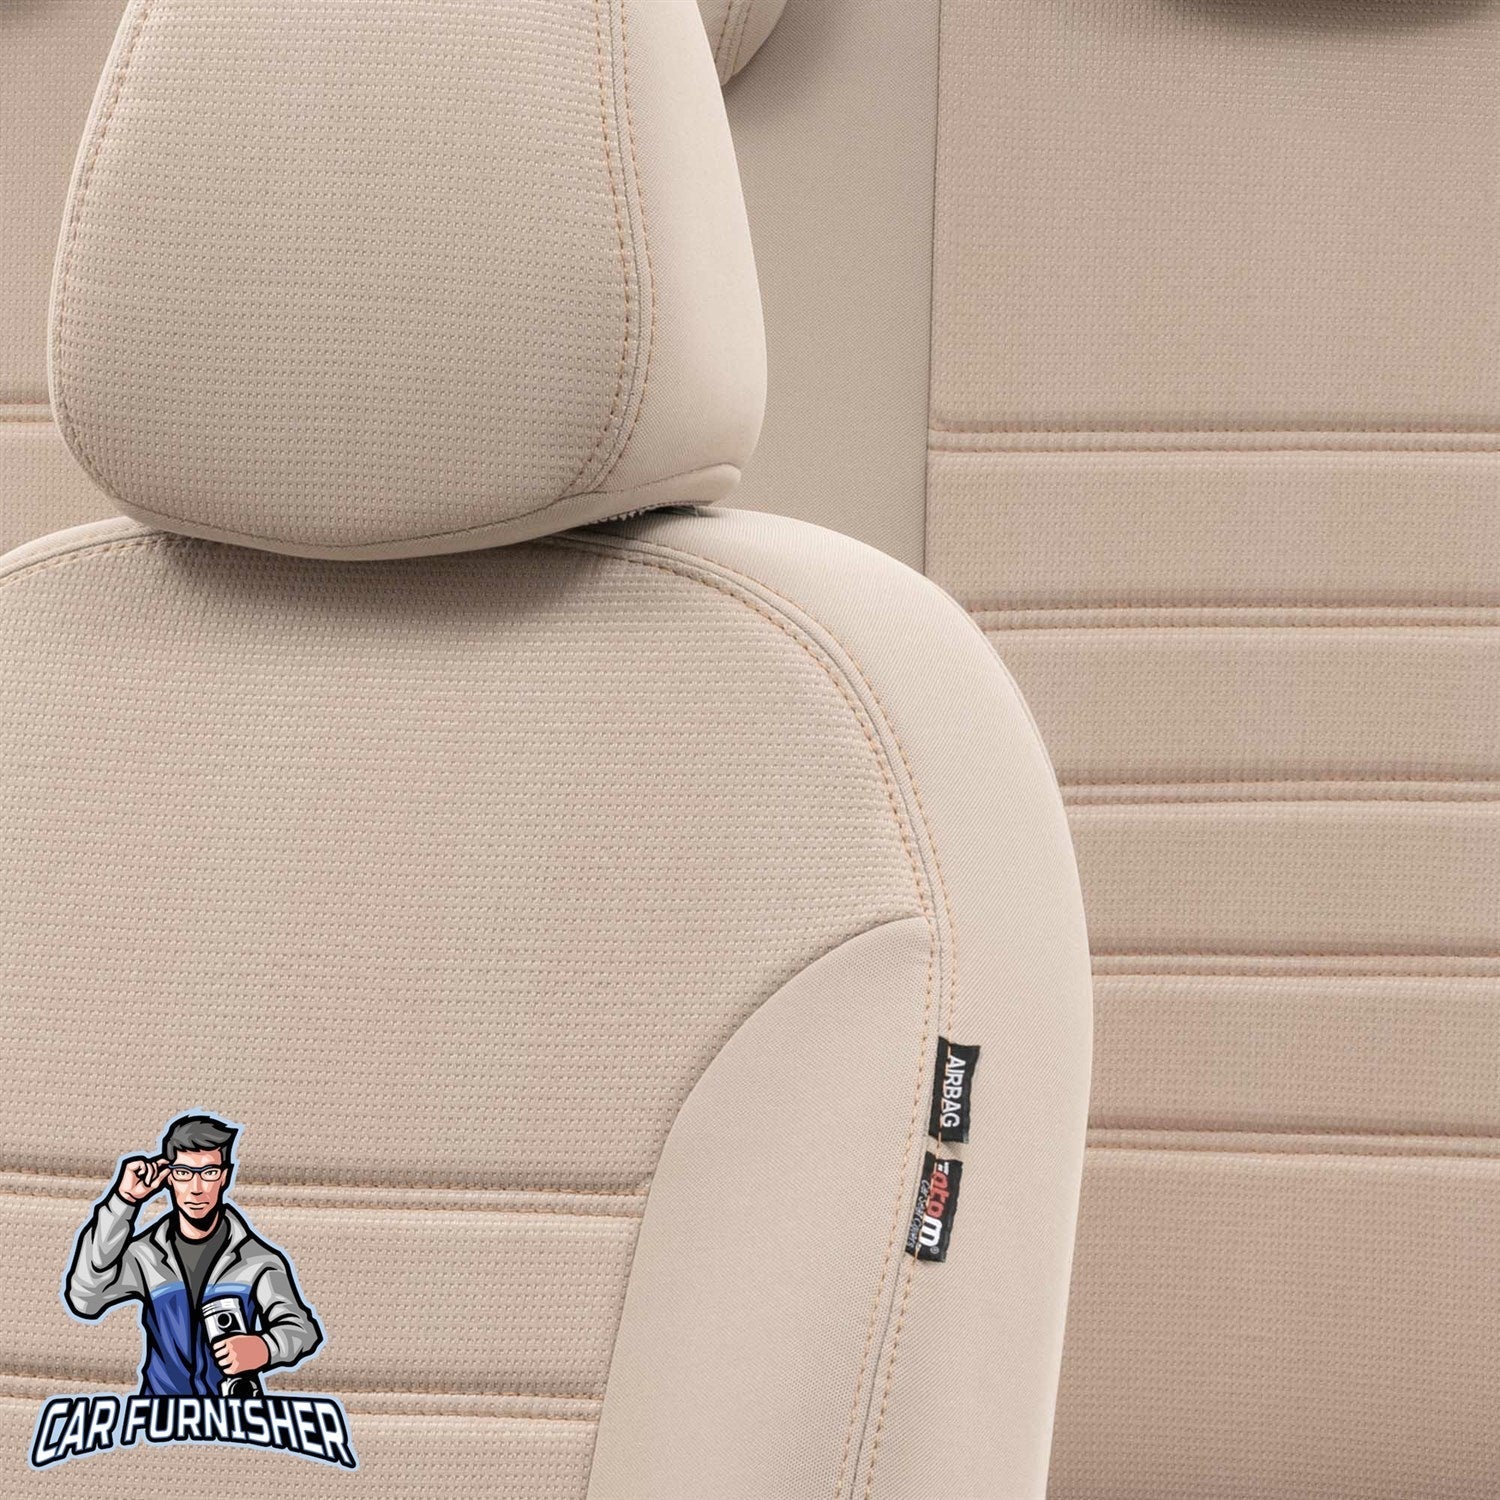 Tesla Model S Seat Cover Original Jacquard Design Beige Jacquard Fabric